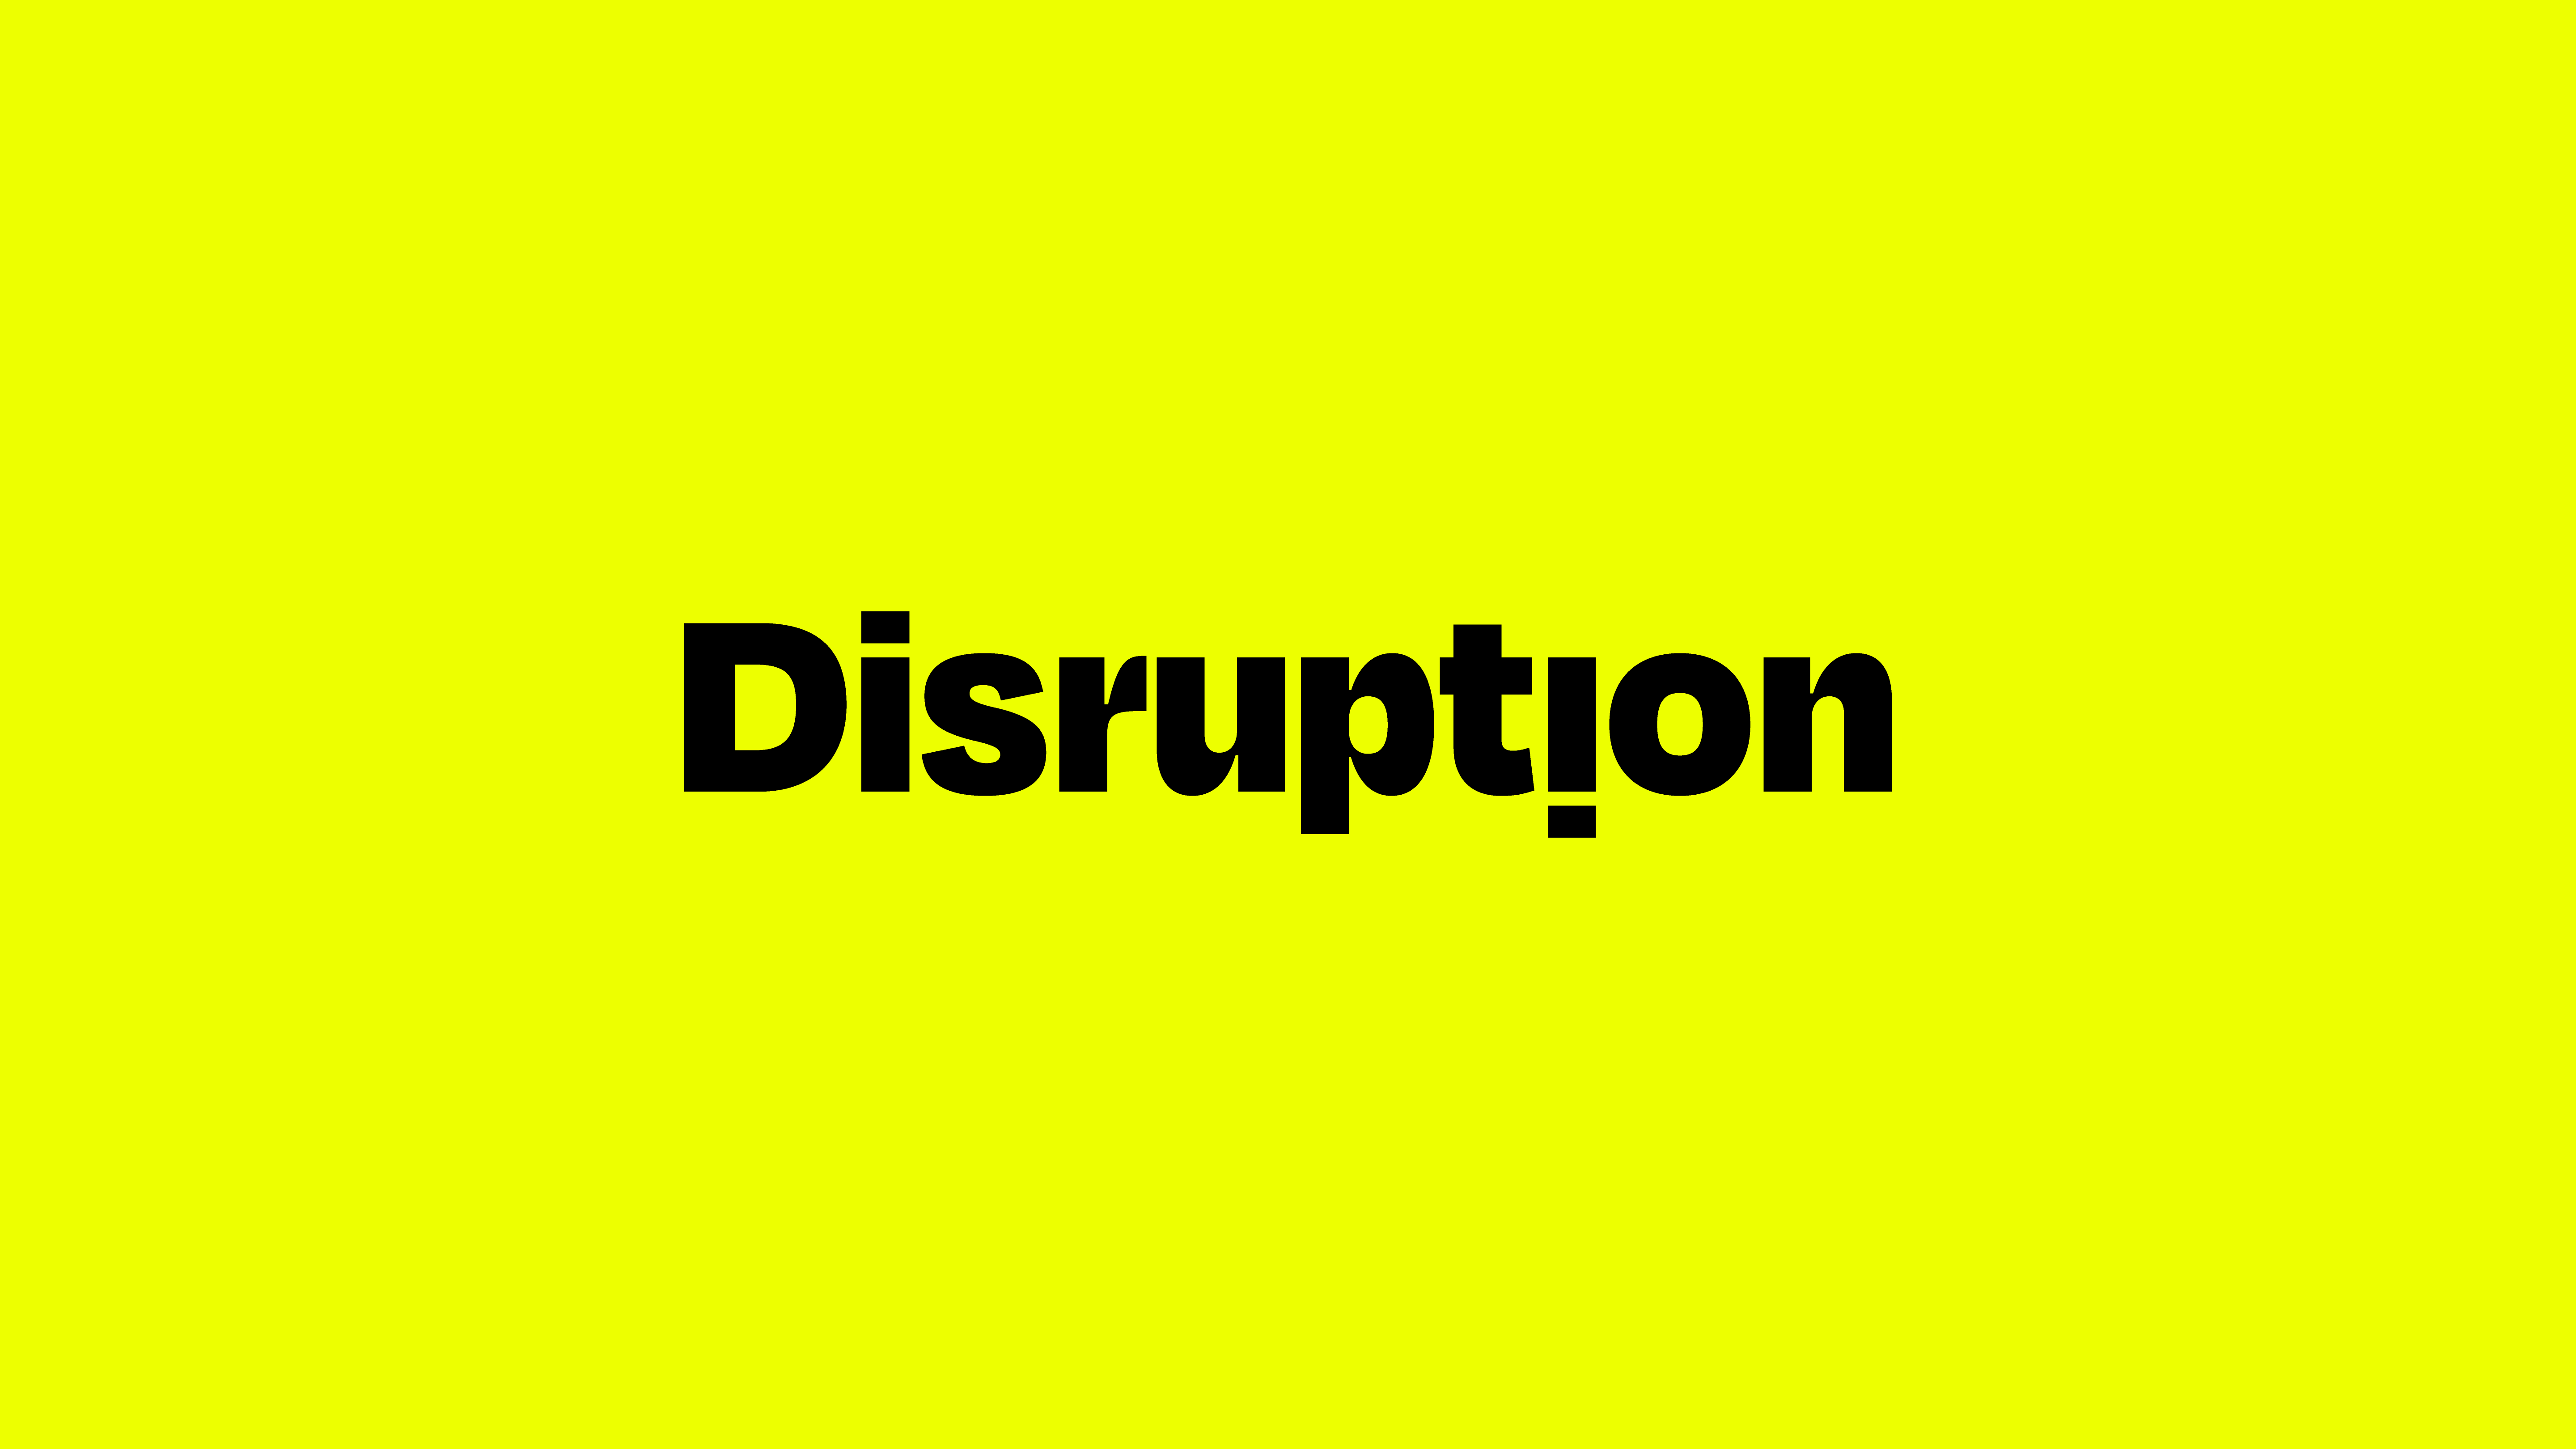 Disruption Image 0